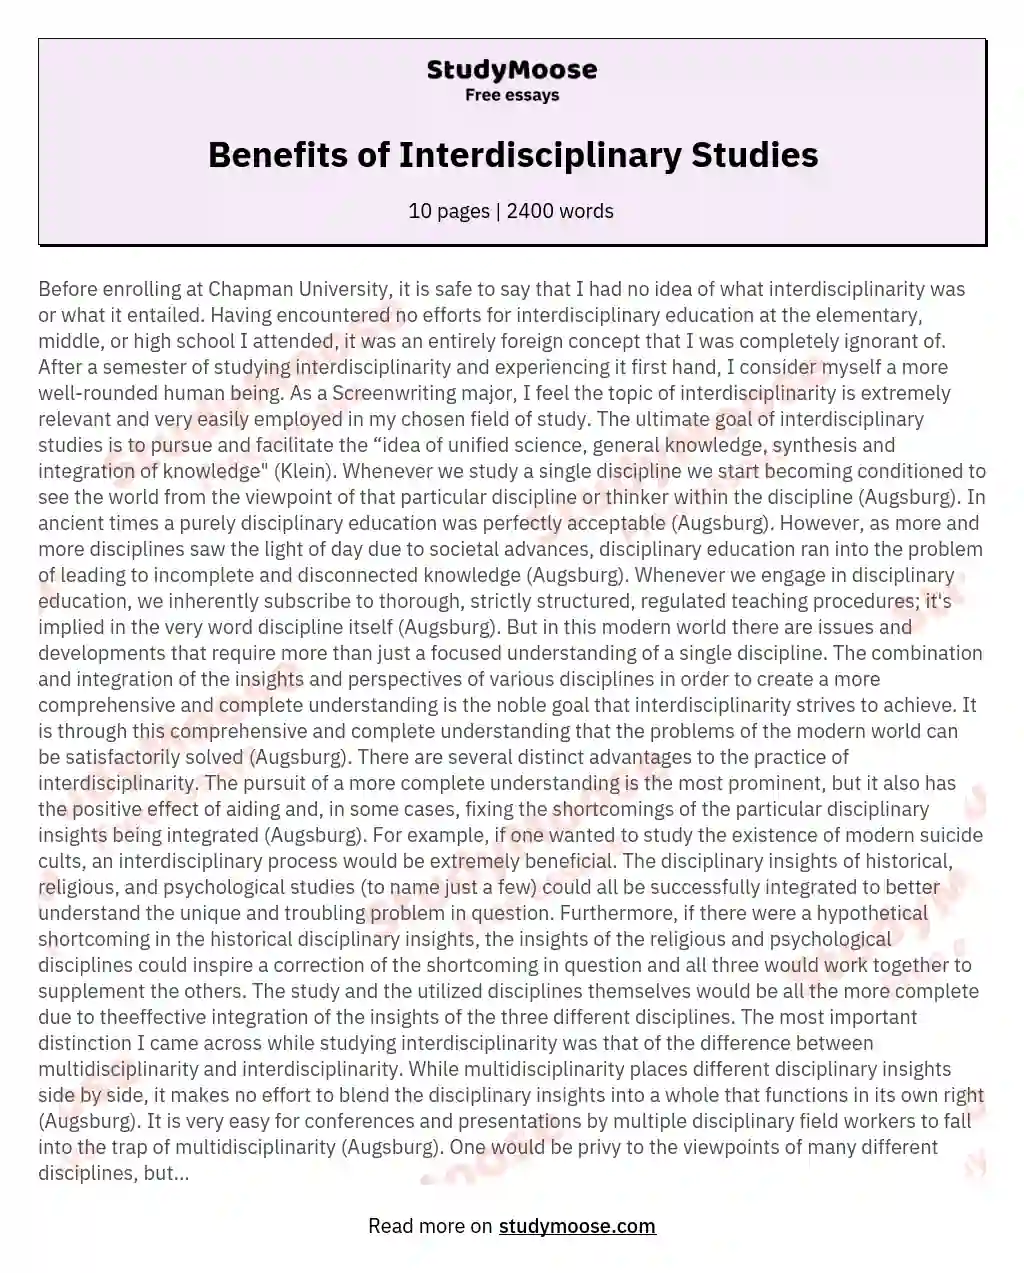 Benefits of Interdisciplinary Studies essay